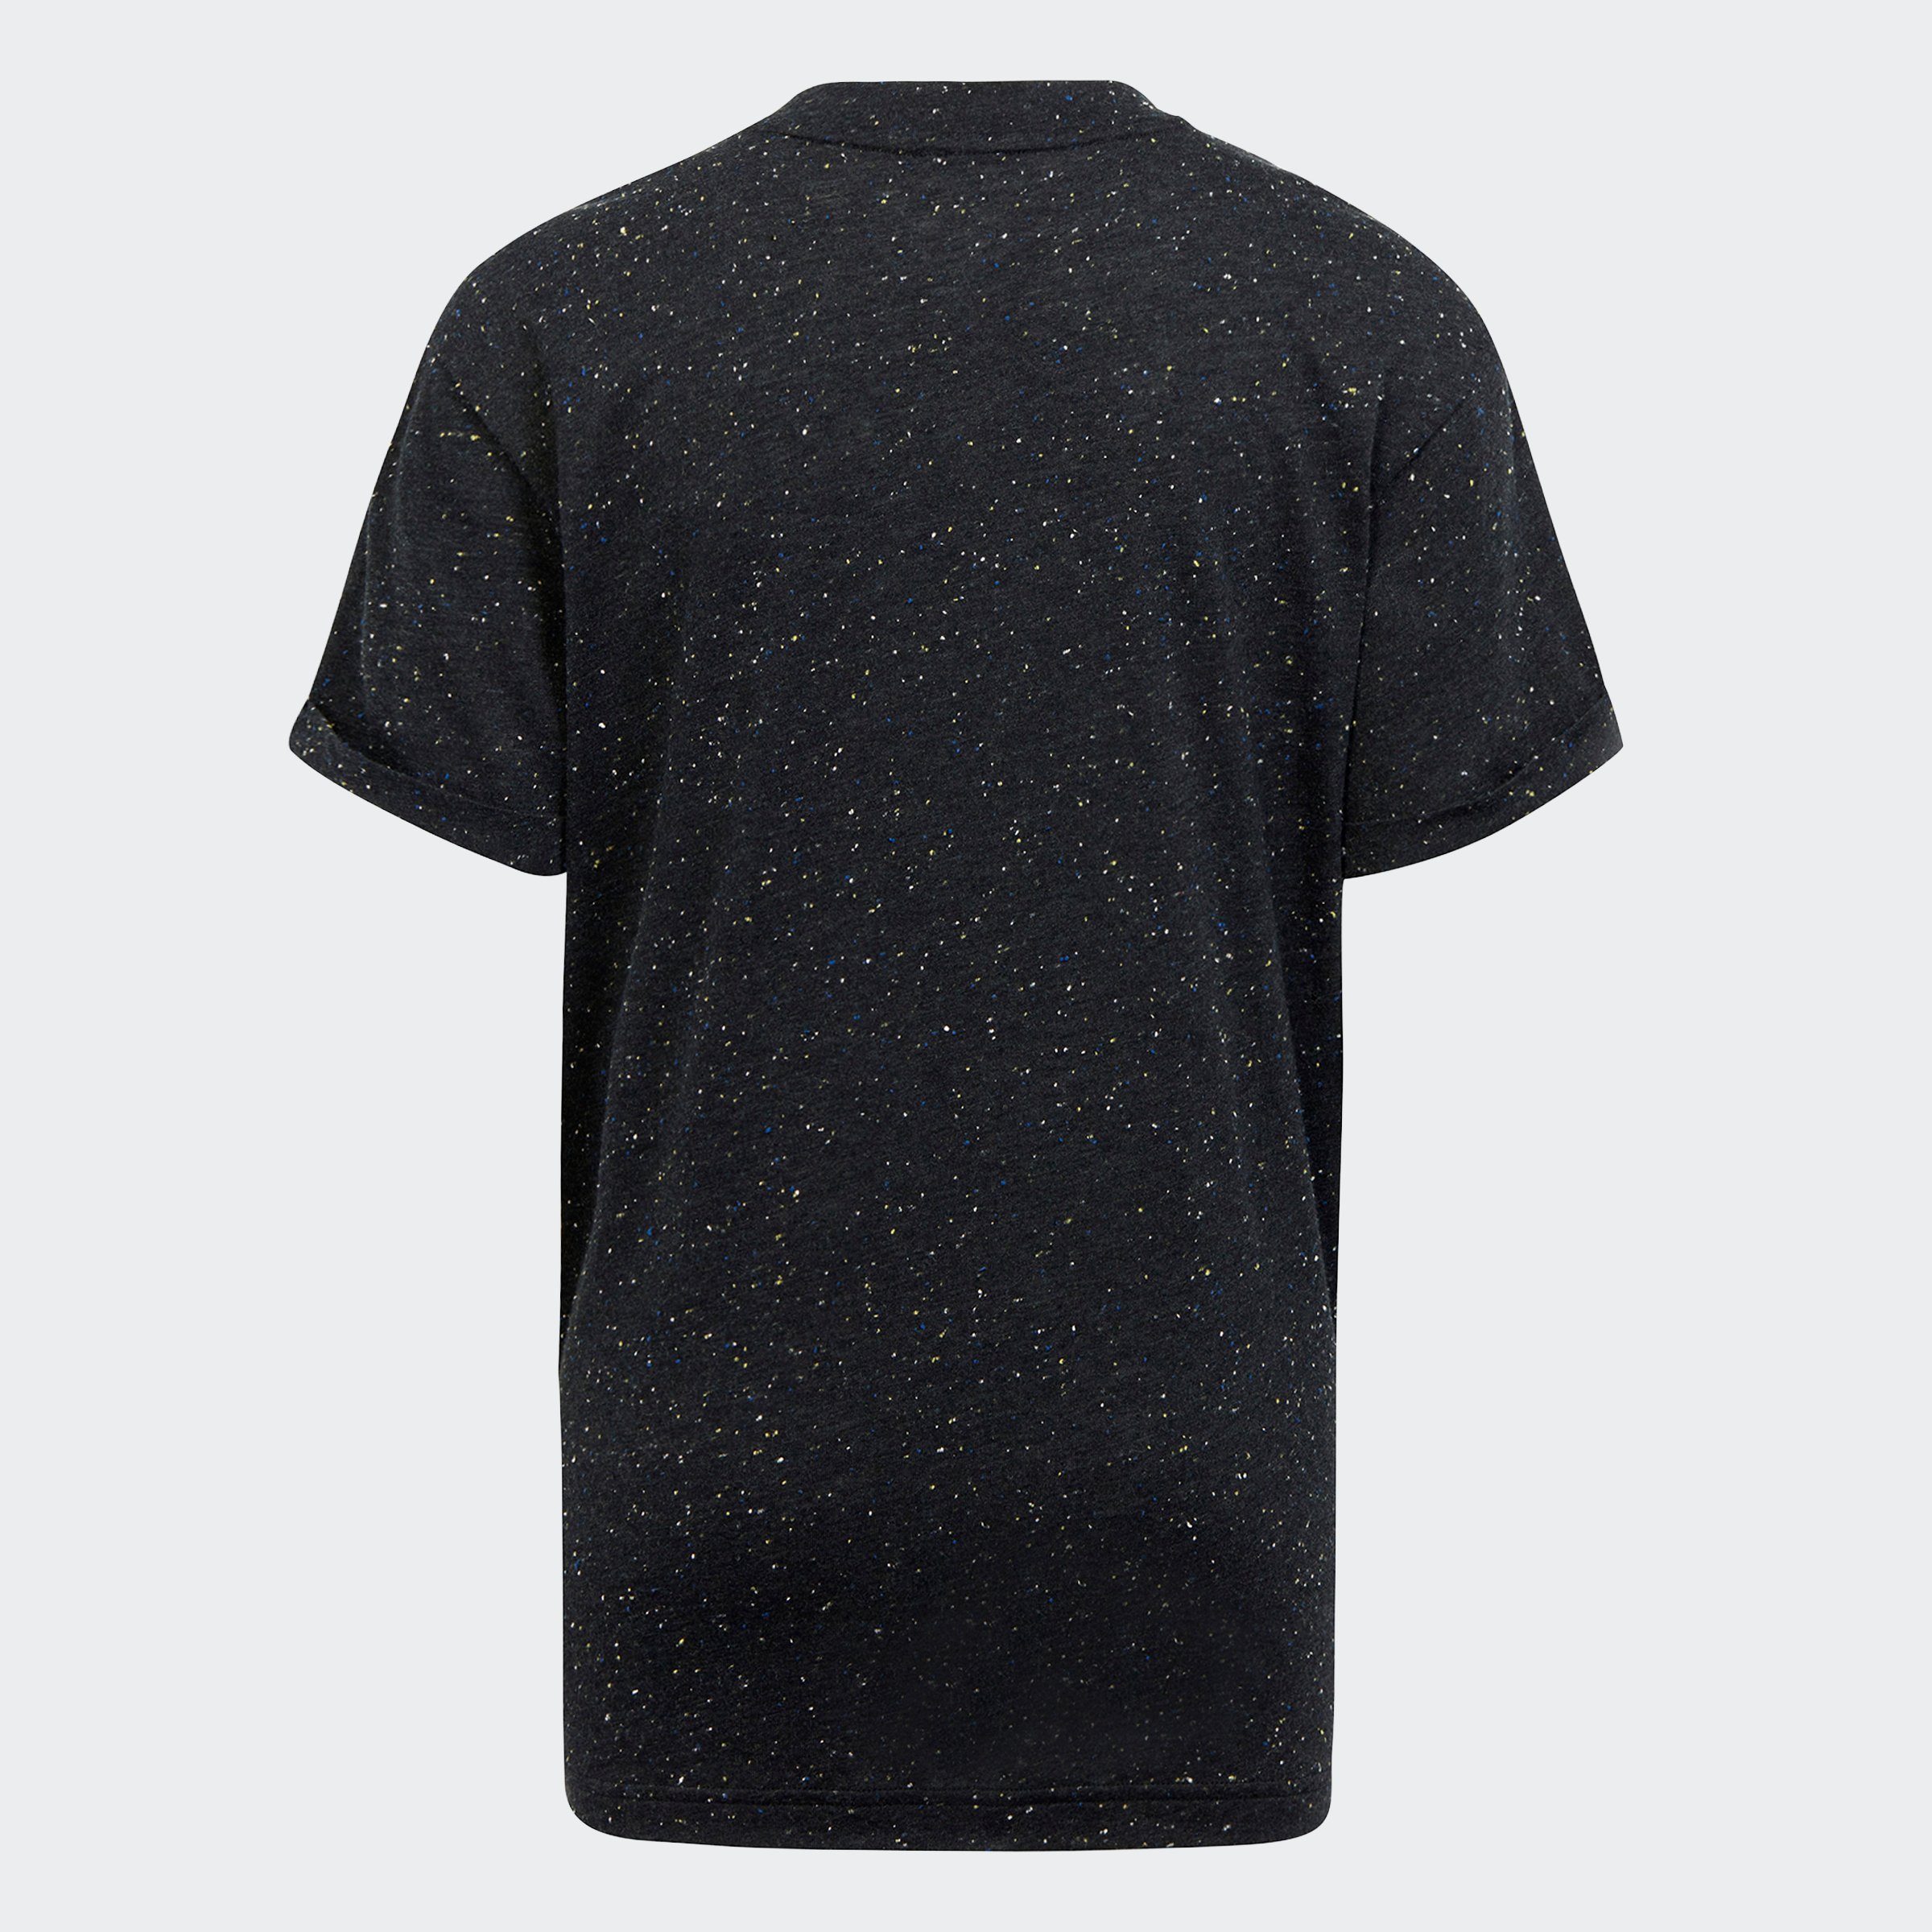 FUTURE White Melange WINNERS / adidas Black T-Shirt ICONS Sportswear